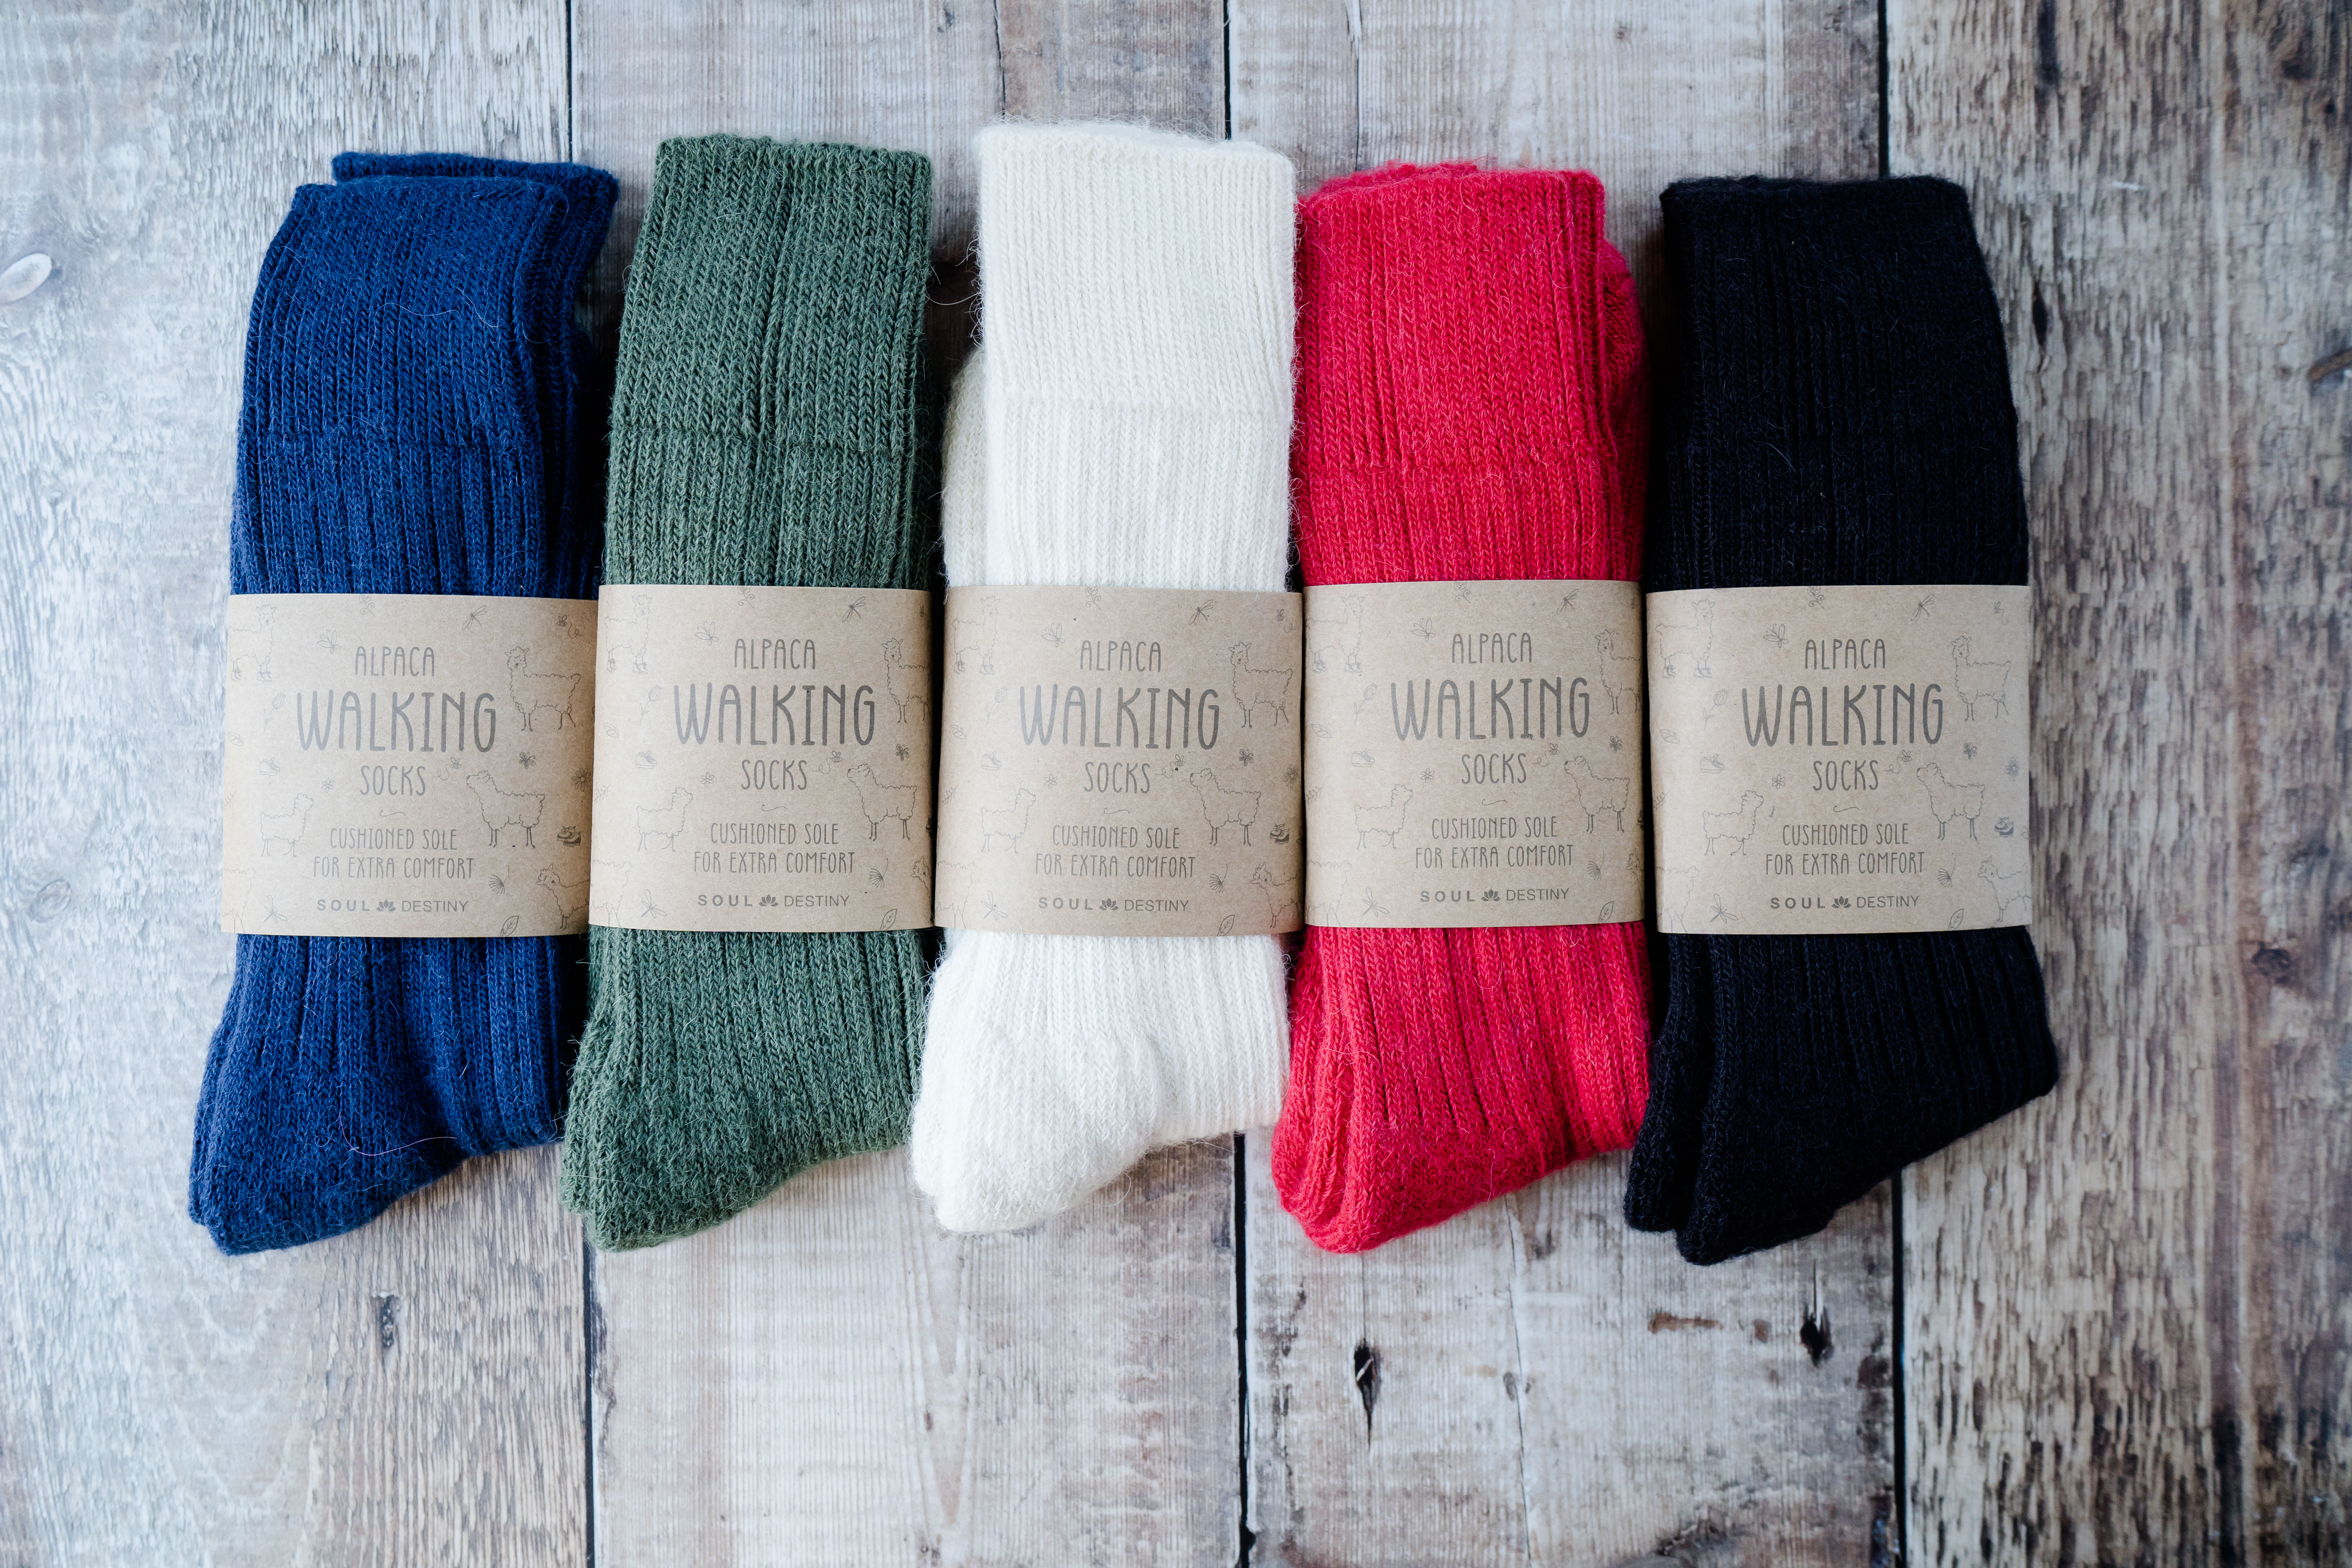 Gift Pack Idea G 5 pairs of Alpaca Walking Socks, Cushioned Sole, 75% Alpaca Wool